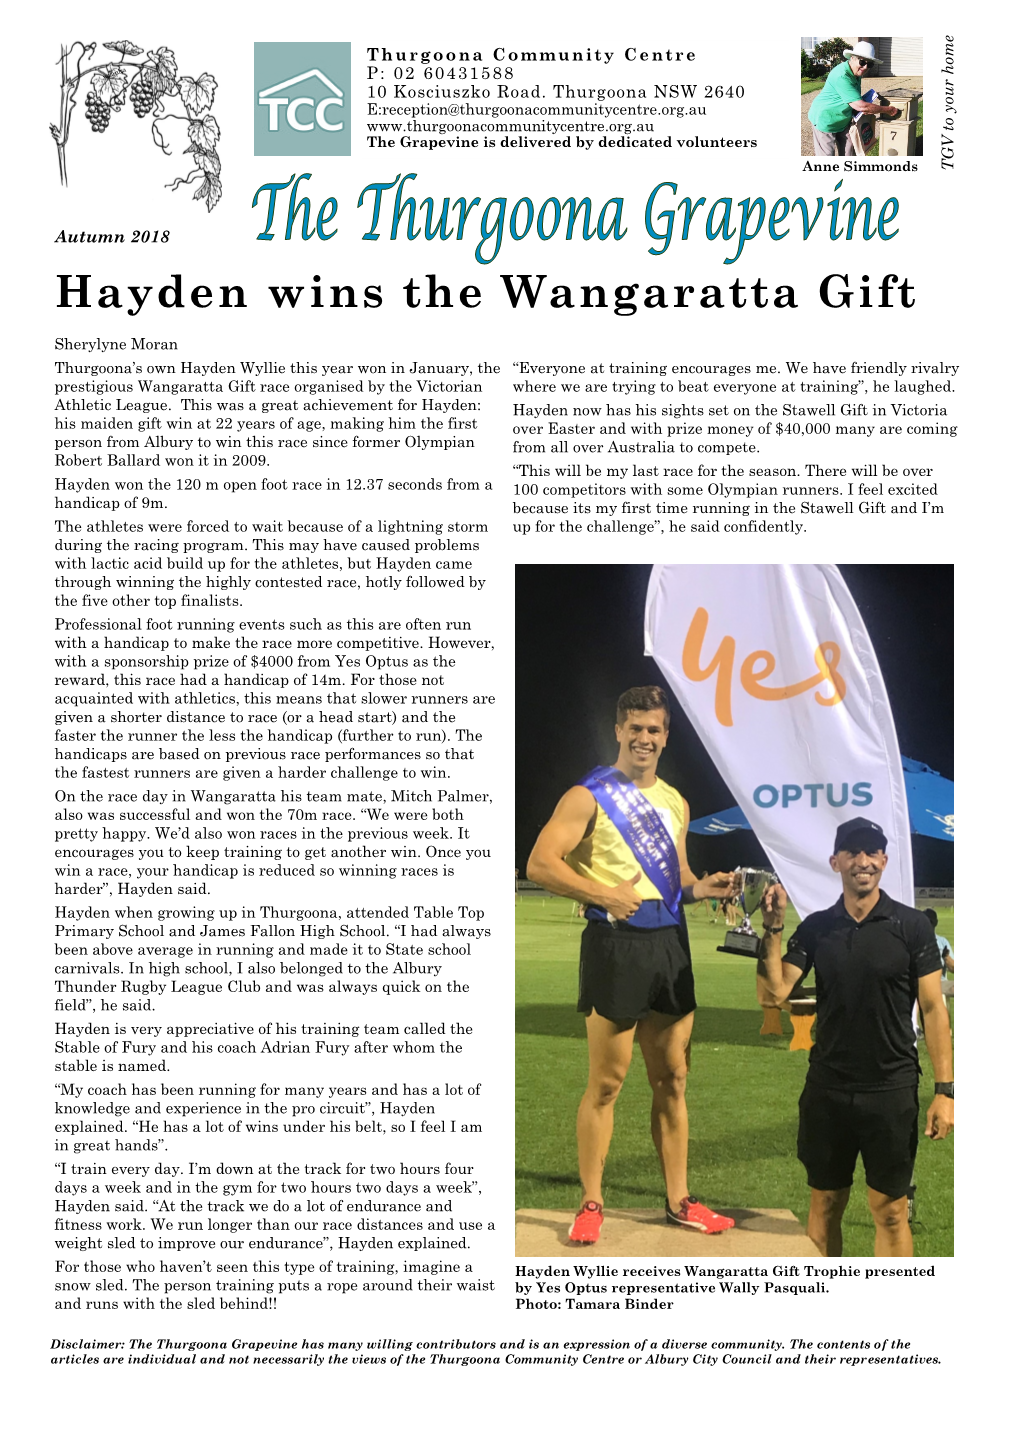 Hayden Wins the Wangaratta Gift